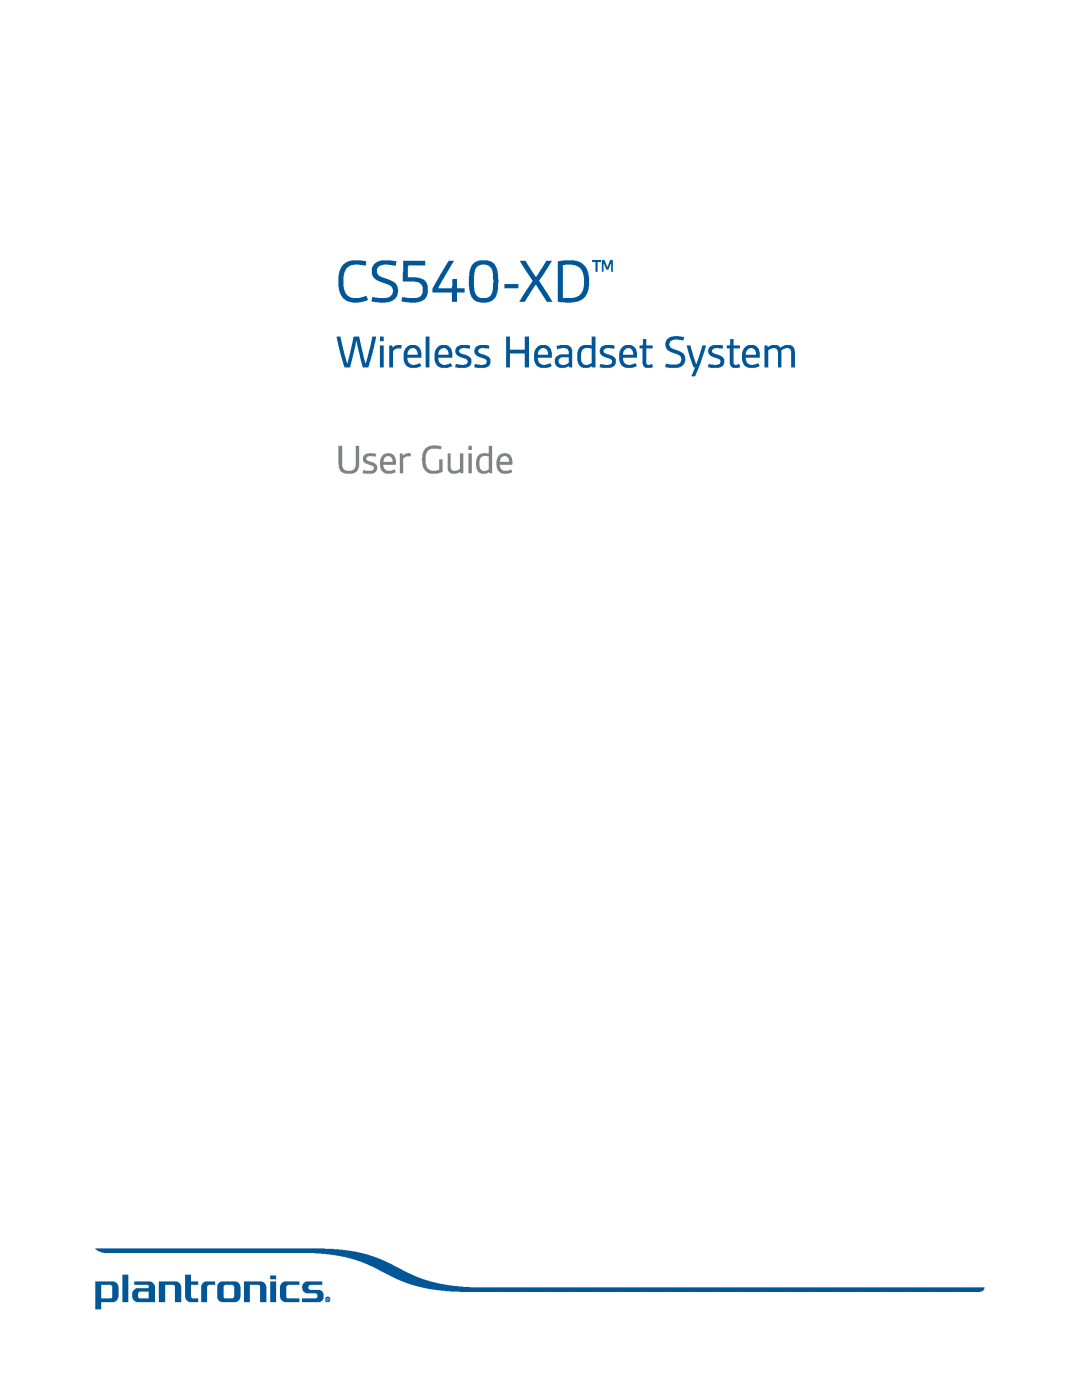 Plantronics CS540-XD manual Wireless Headset System, User Guide 